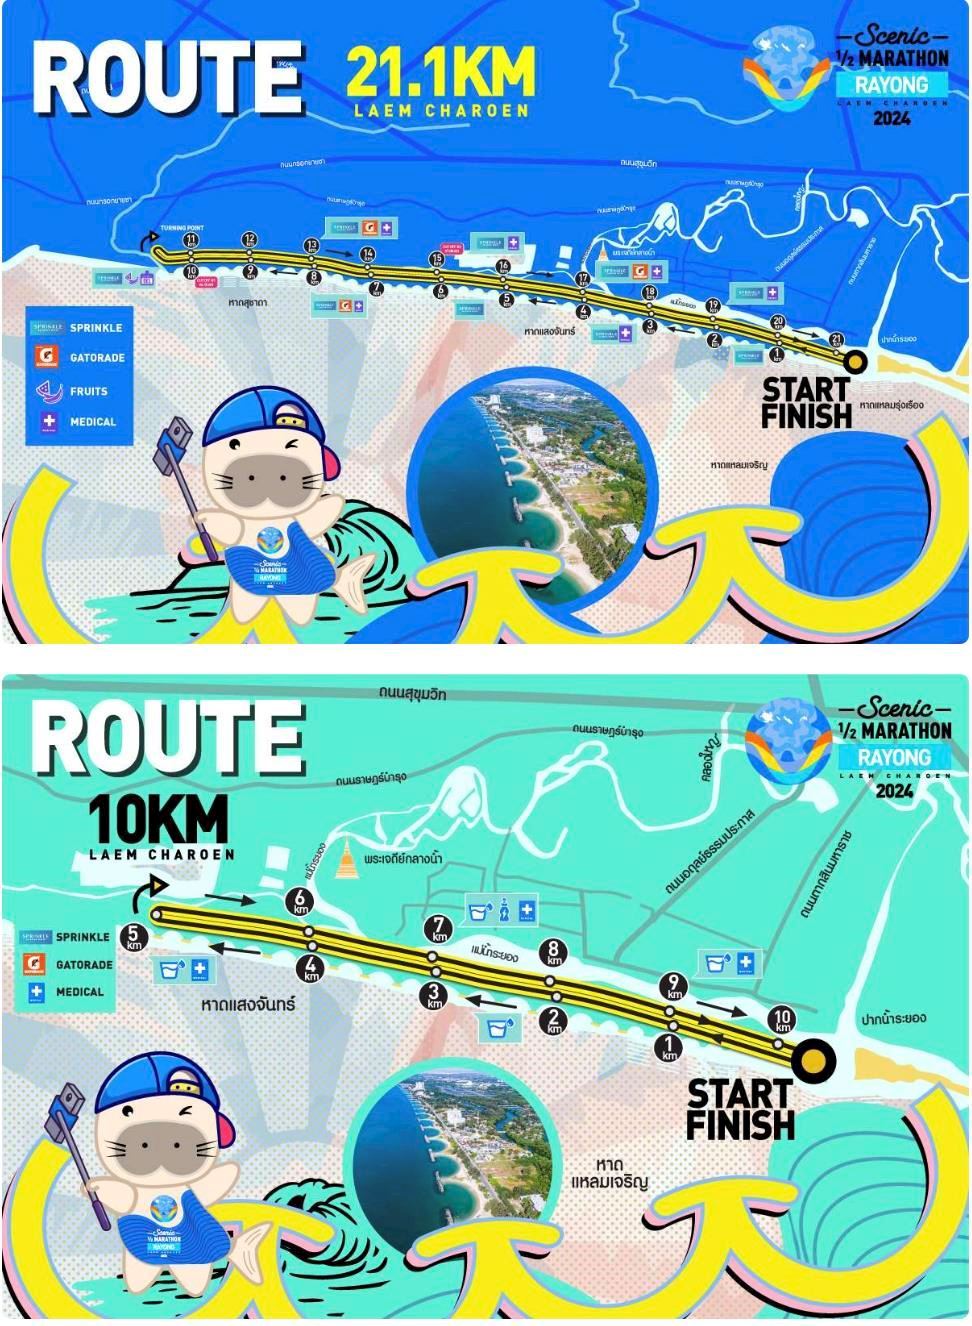 Scenic Half Marathon Rayong Route Map